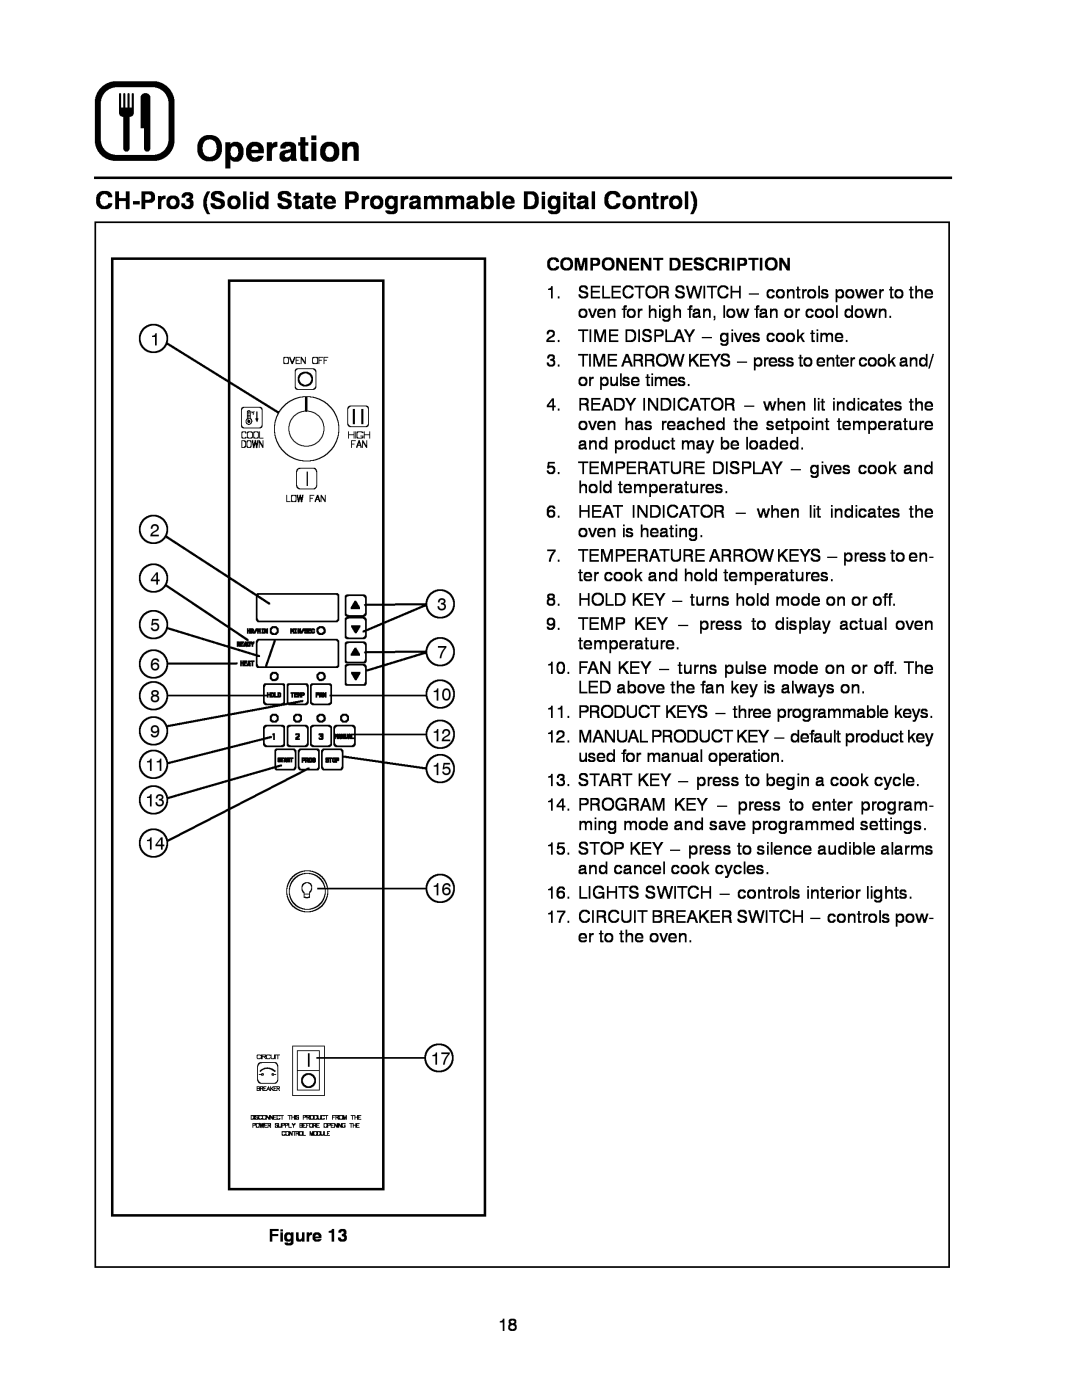 Blodgett MARK V XCEL CONVECTION OVEN Operation, CH-Pro3 Solid State Programmable Digital Control, Component Description 